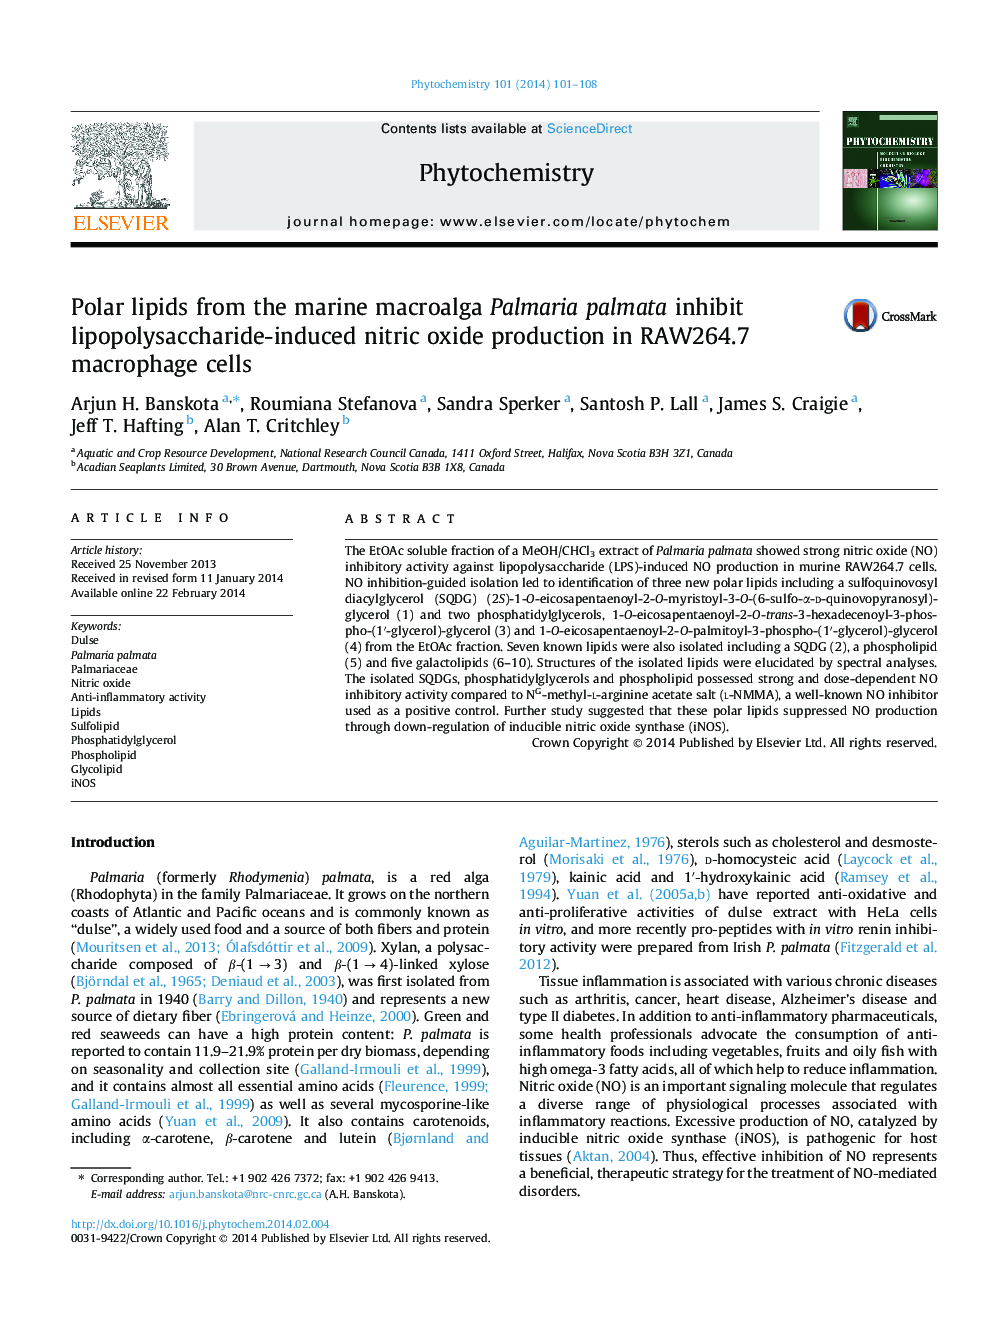 Polar lipids from the marine macroalga Palmaria palmata inhibit lipopolysaccharide-induced nitric oxide production in RAW264.7 macrophage cells